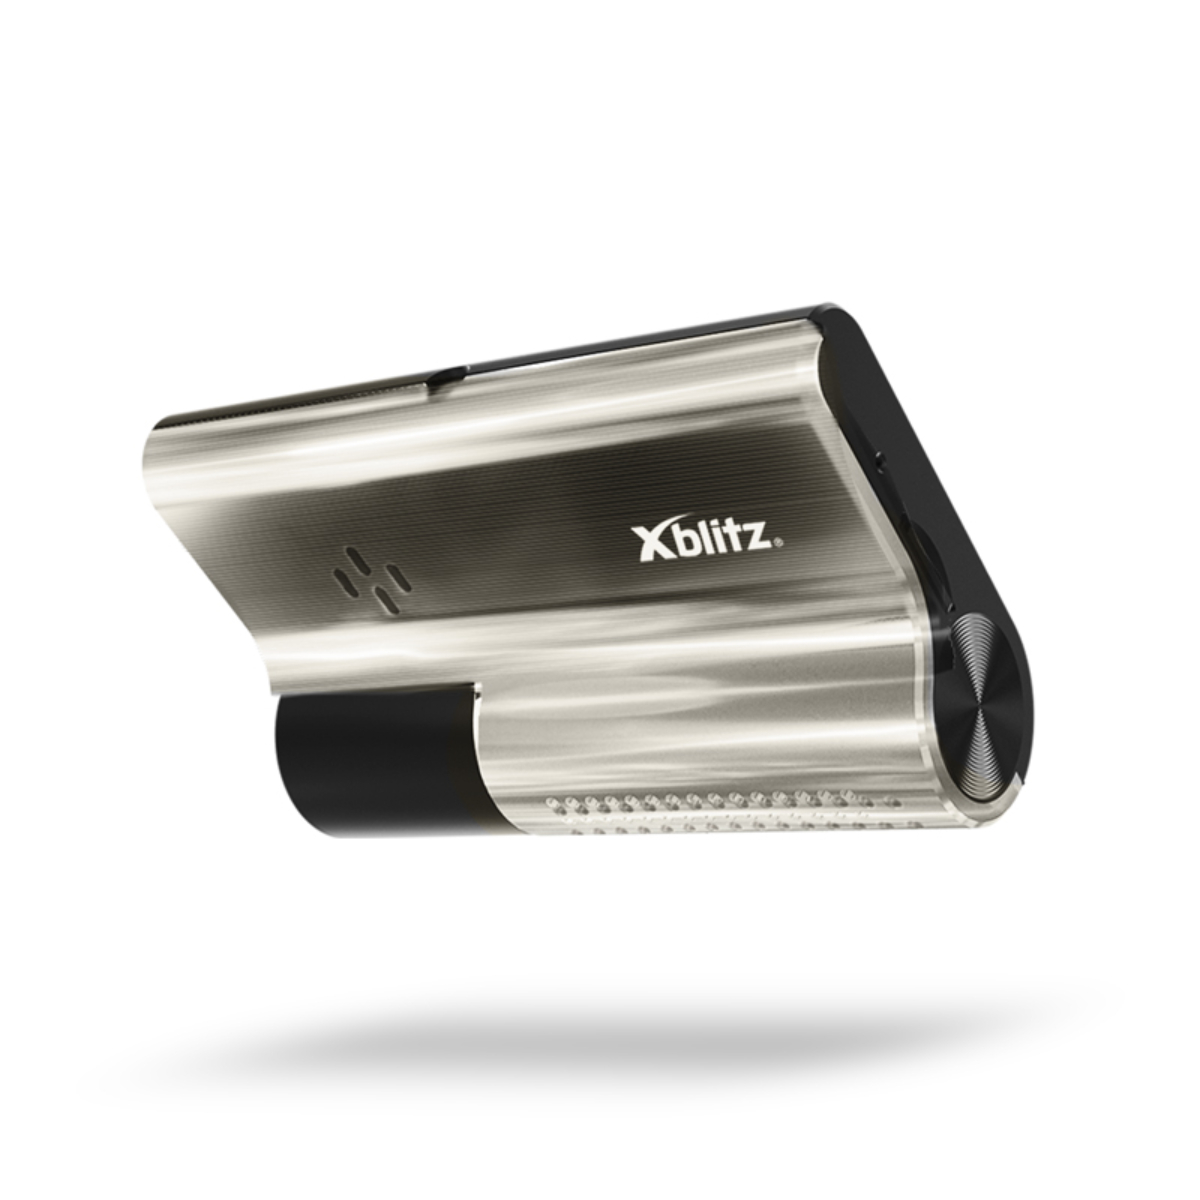 WiFi XBLITZ Display Dashcam X6